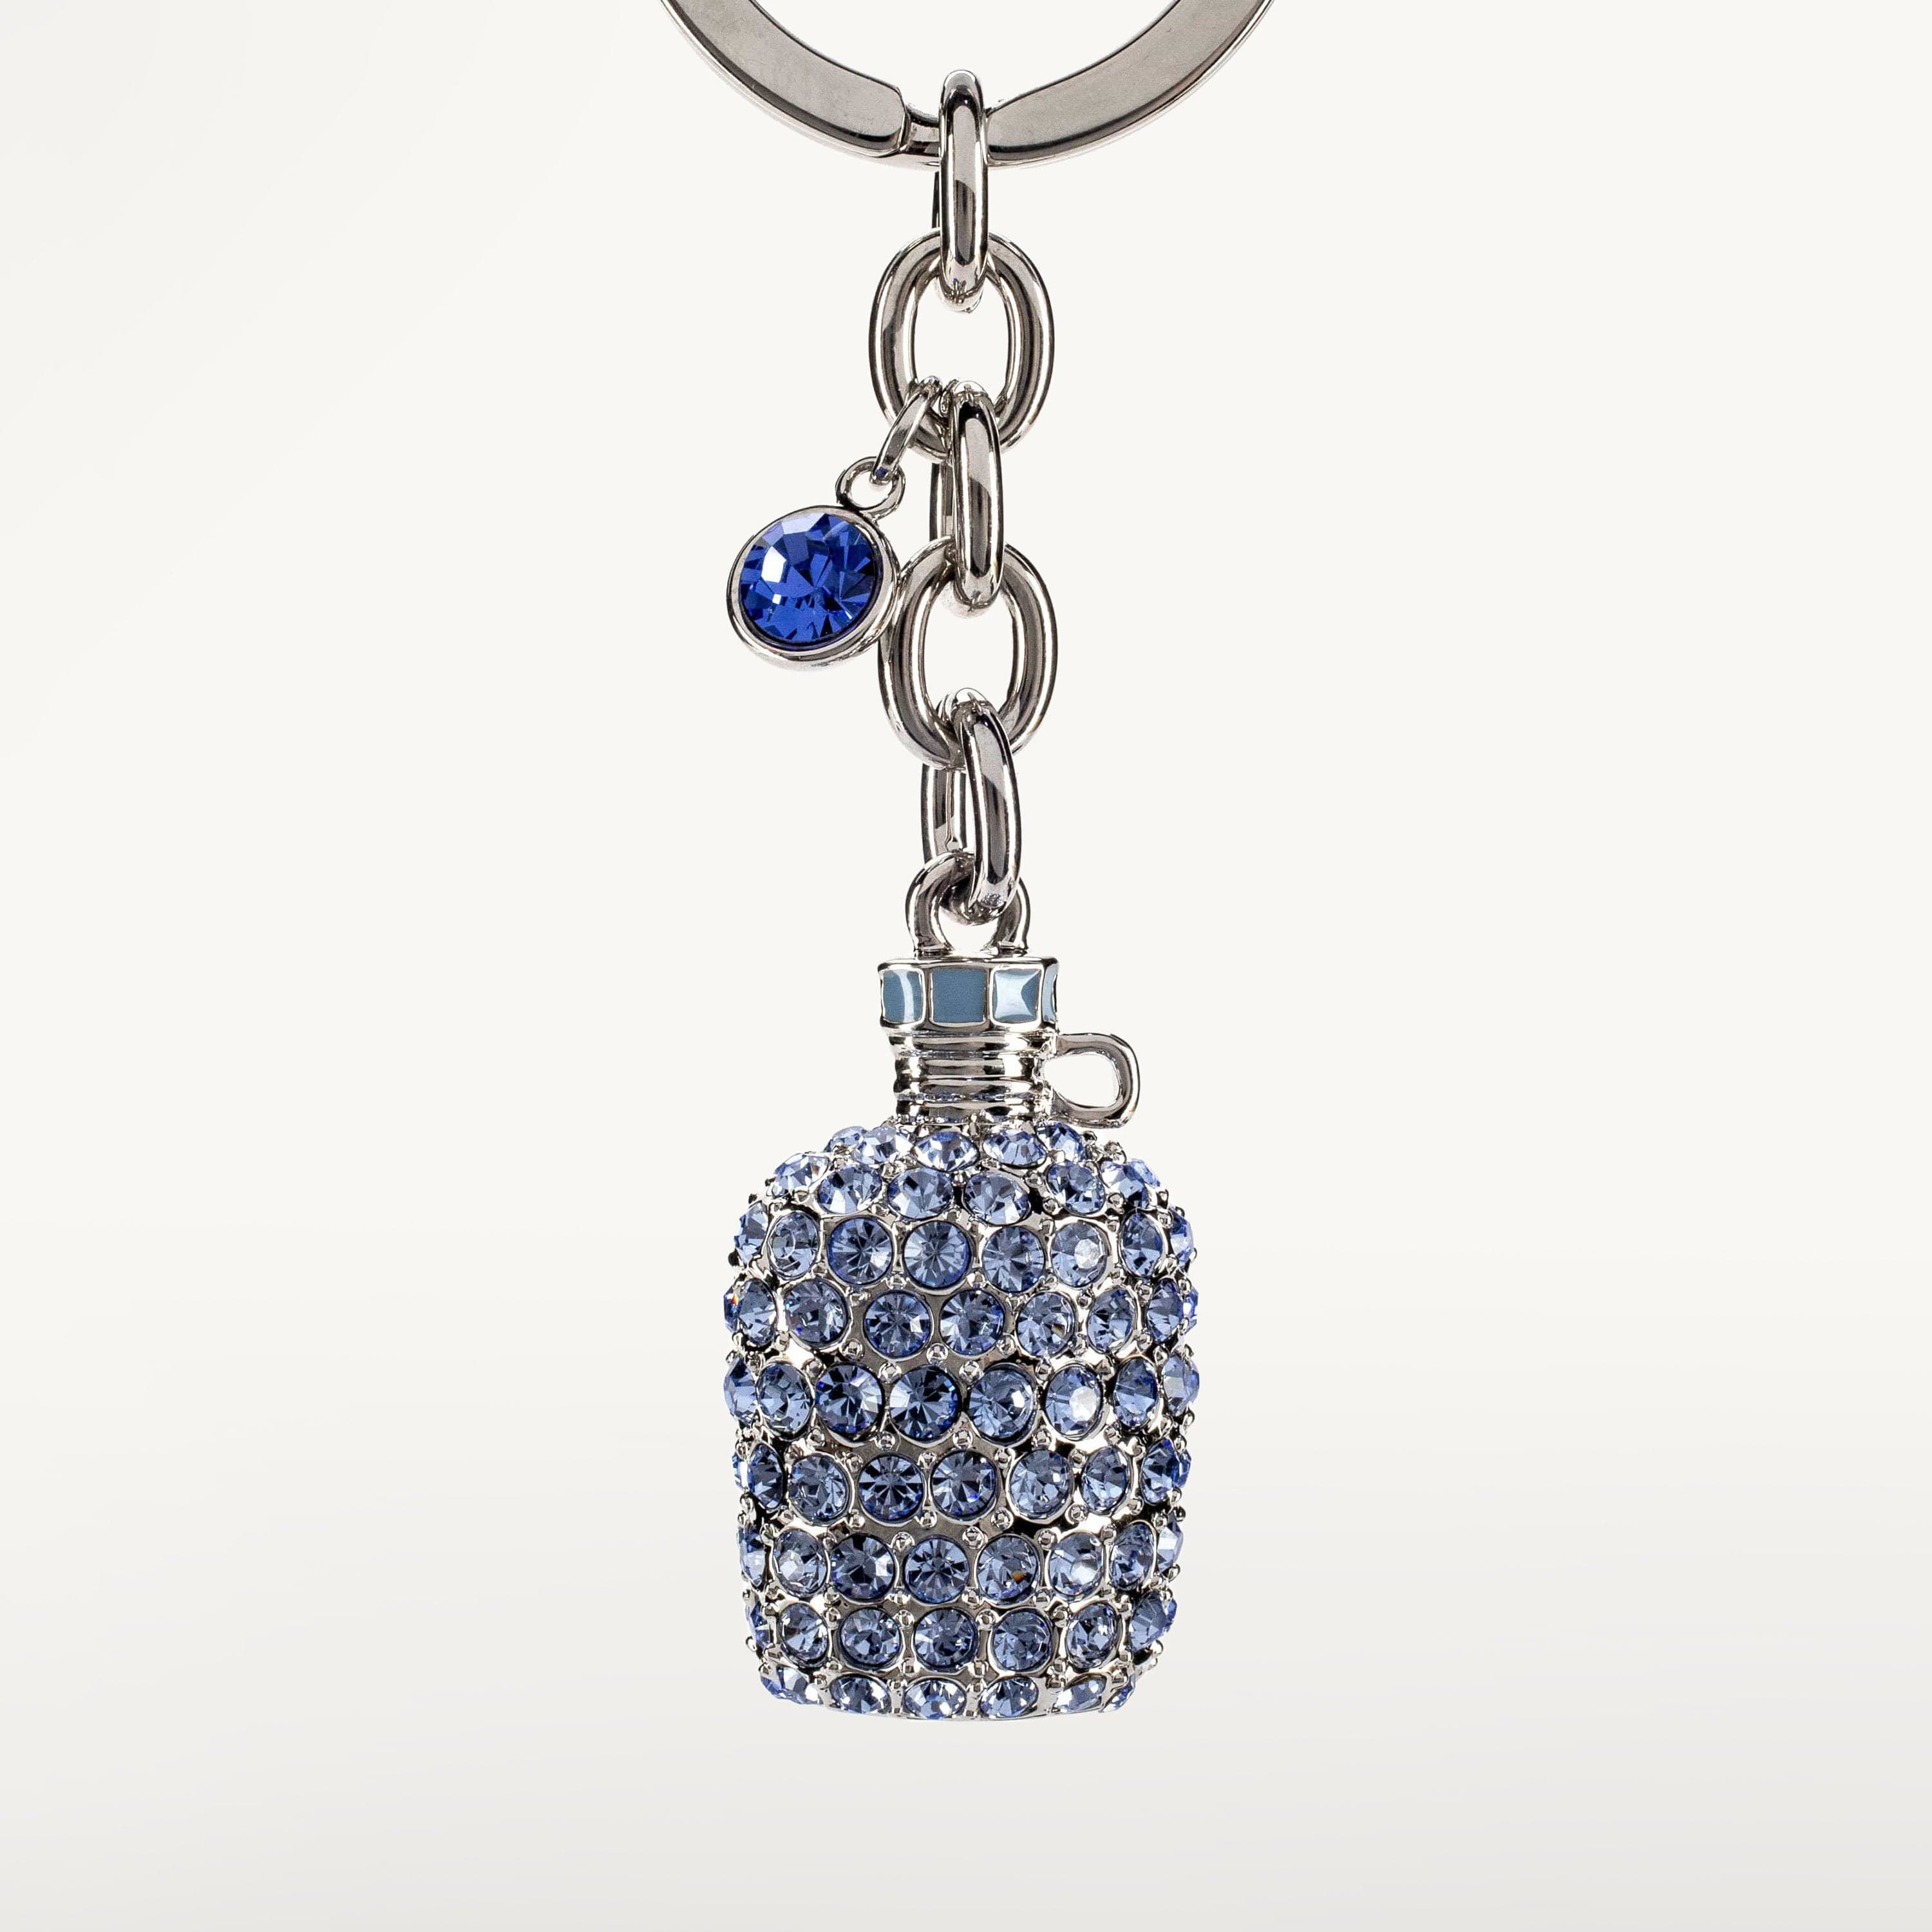 Kalifano Crystal Keychains Sapphire Bottle Keychain made with Swarovski Crystals SKC-083